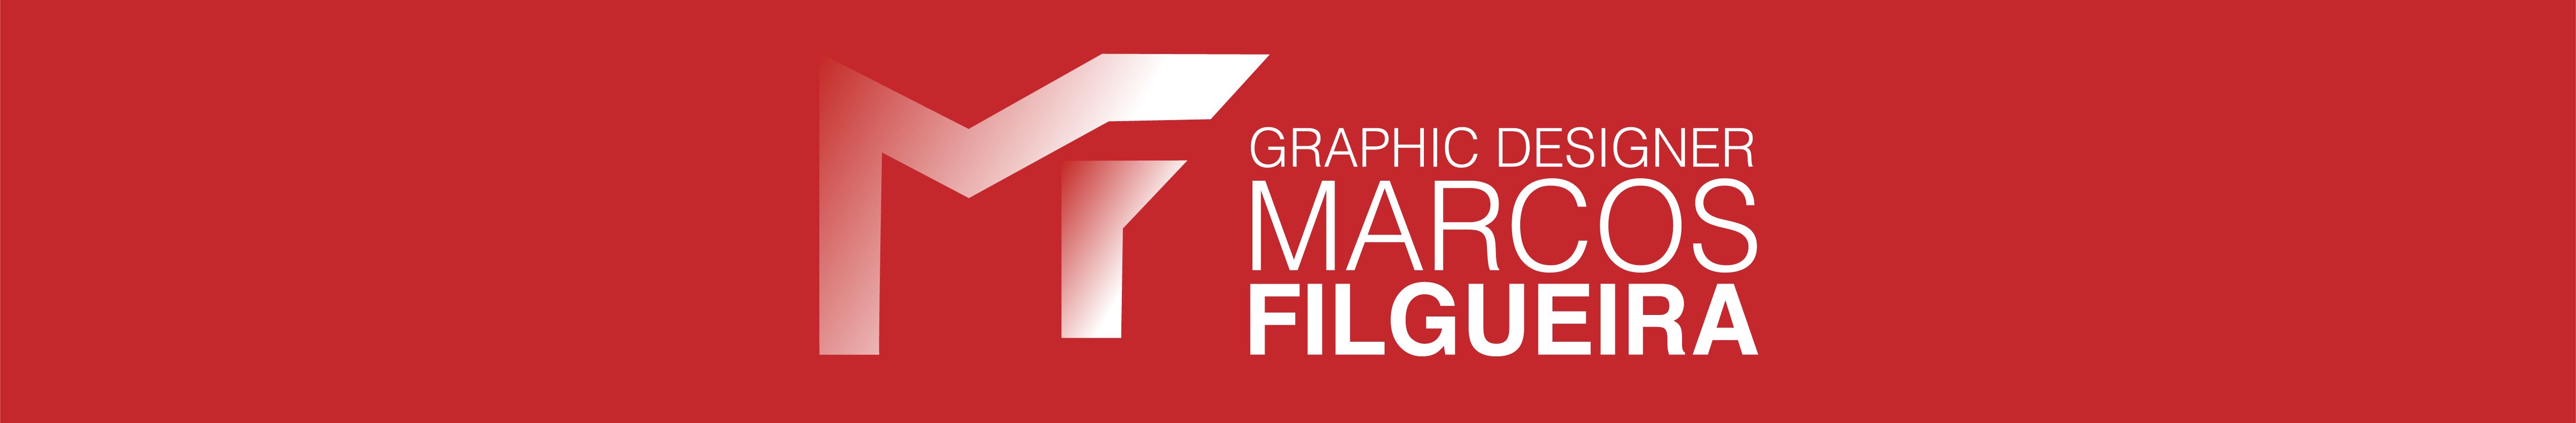 Marcos Filgueira's profile banner